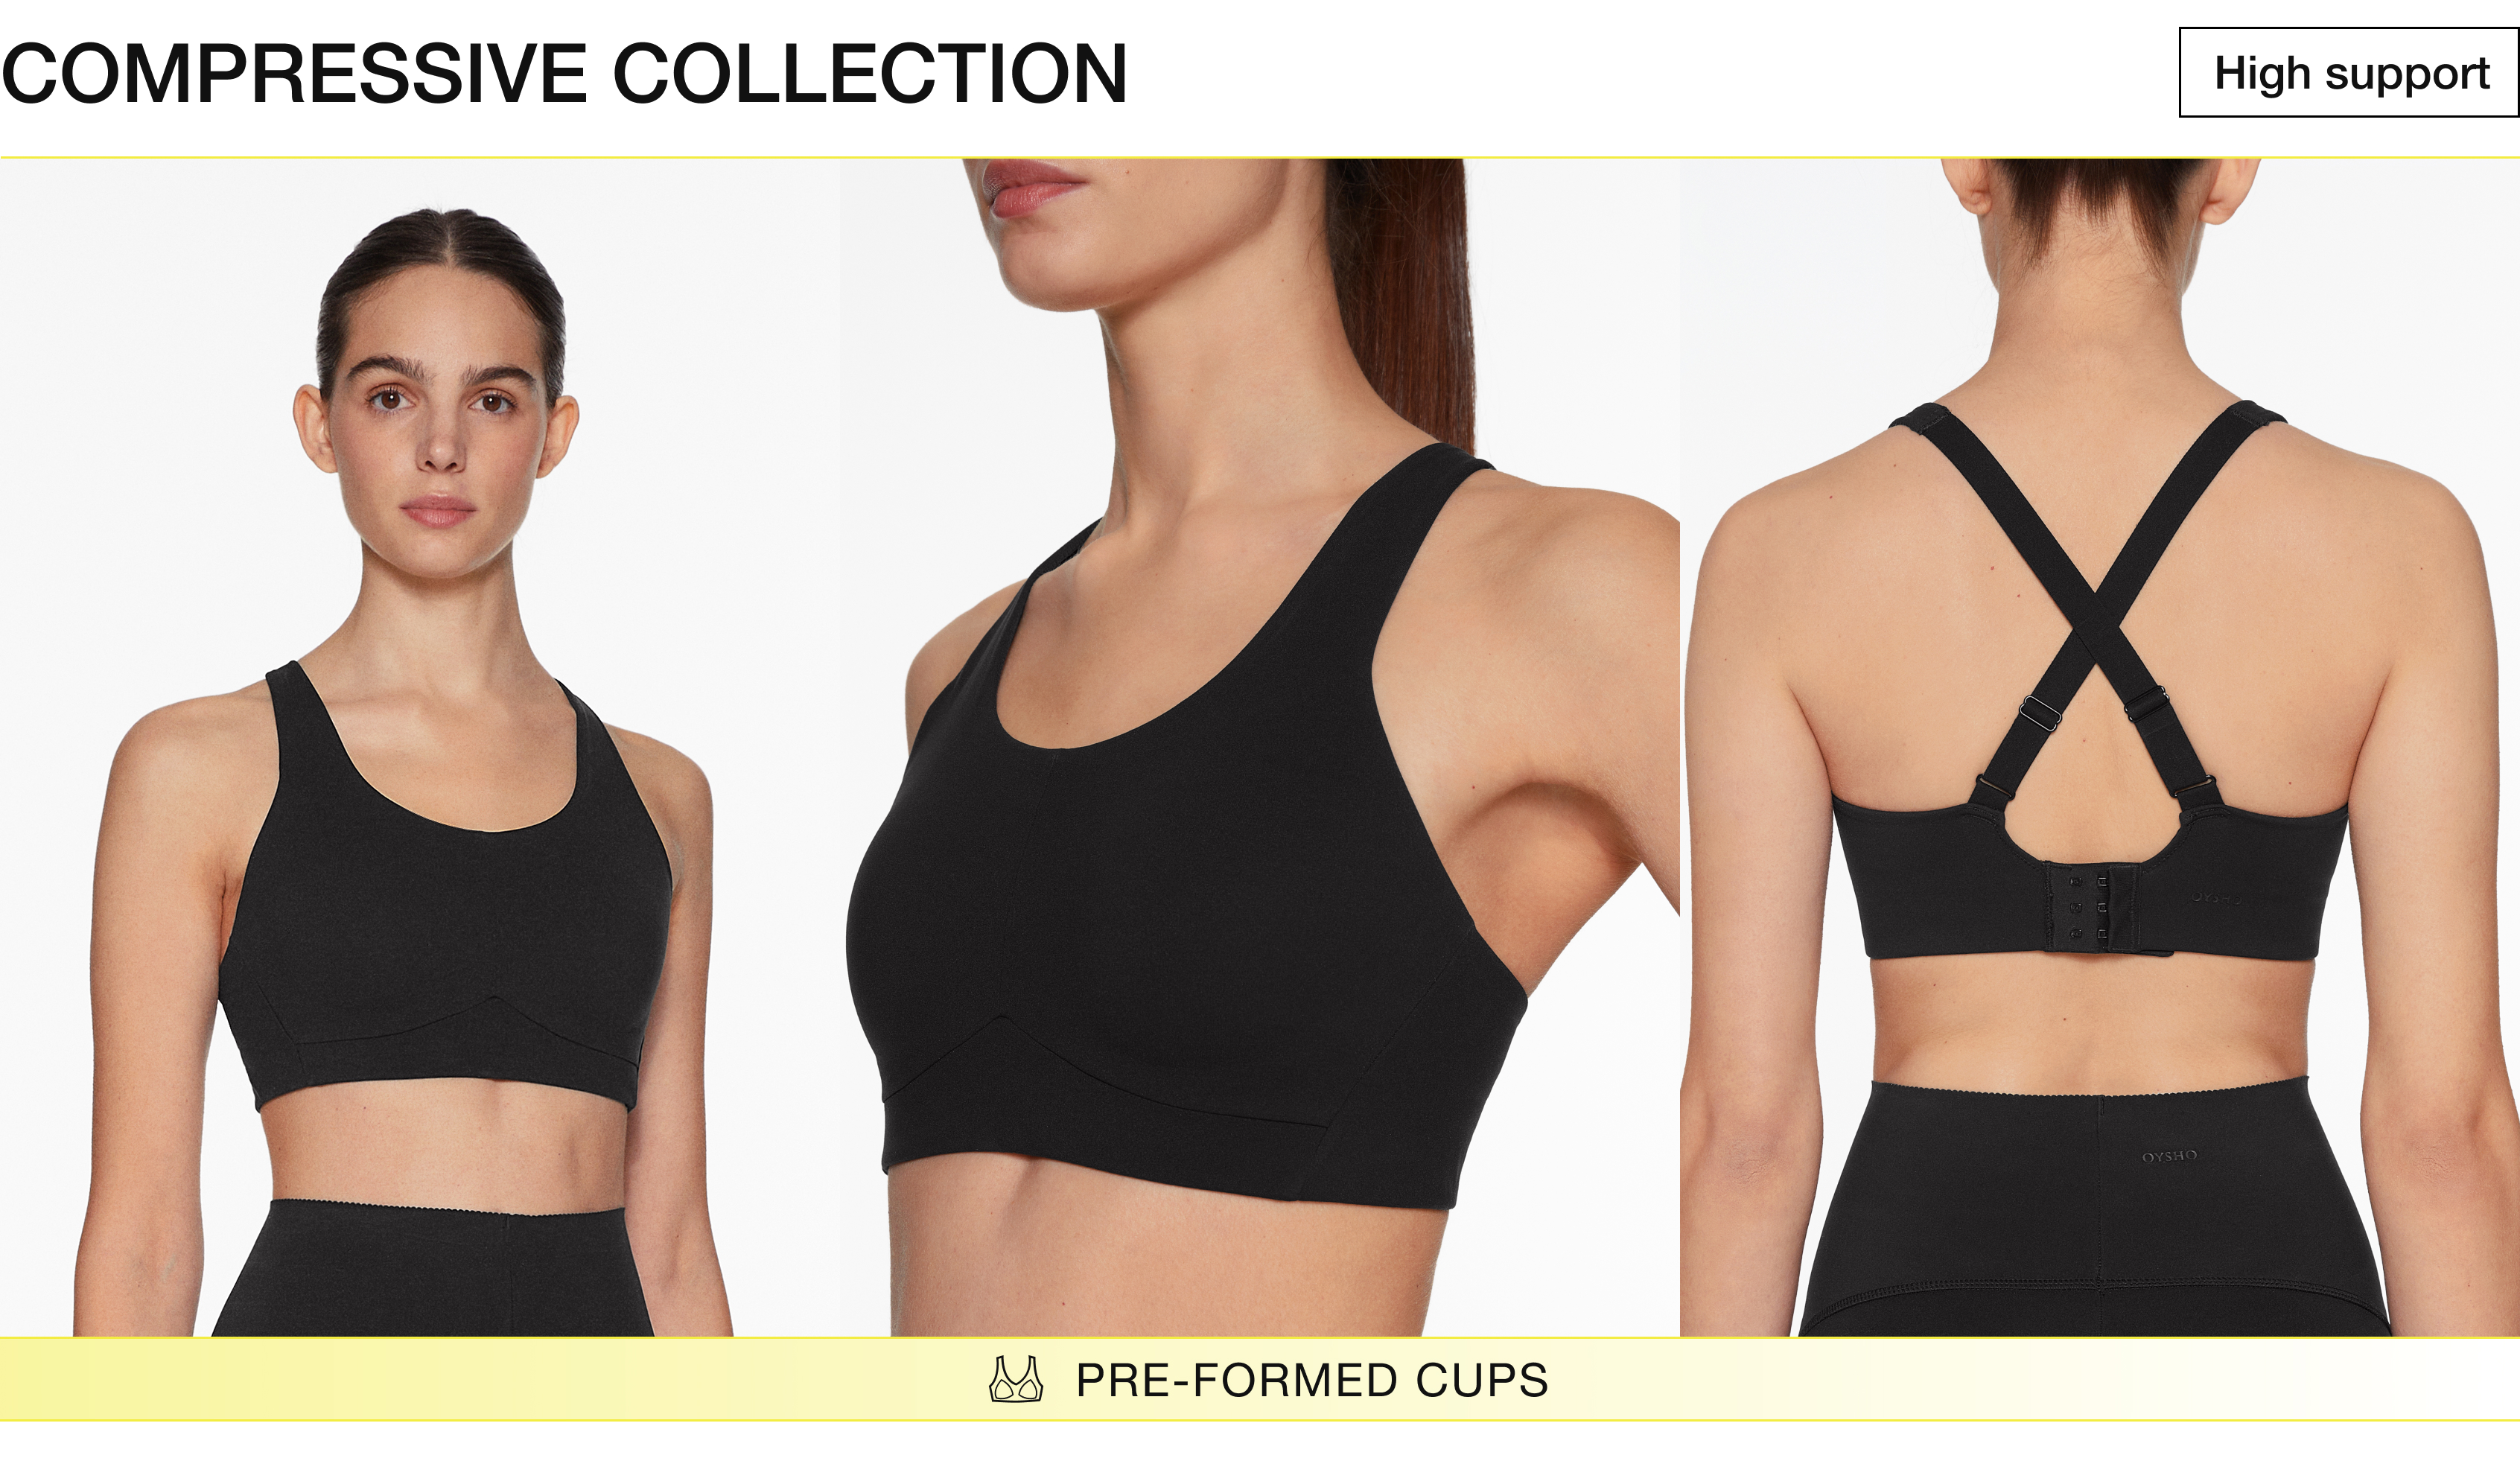 Oysho Medium-support Comfortlux sports bra with cups - 136643345-249